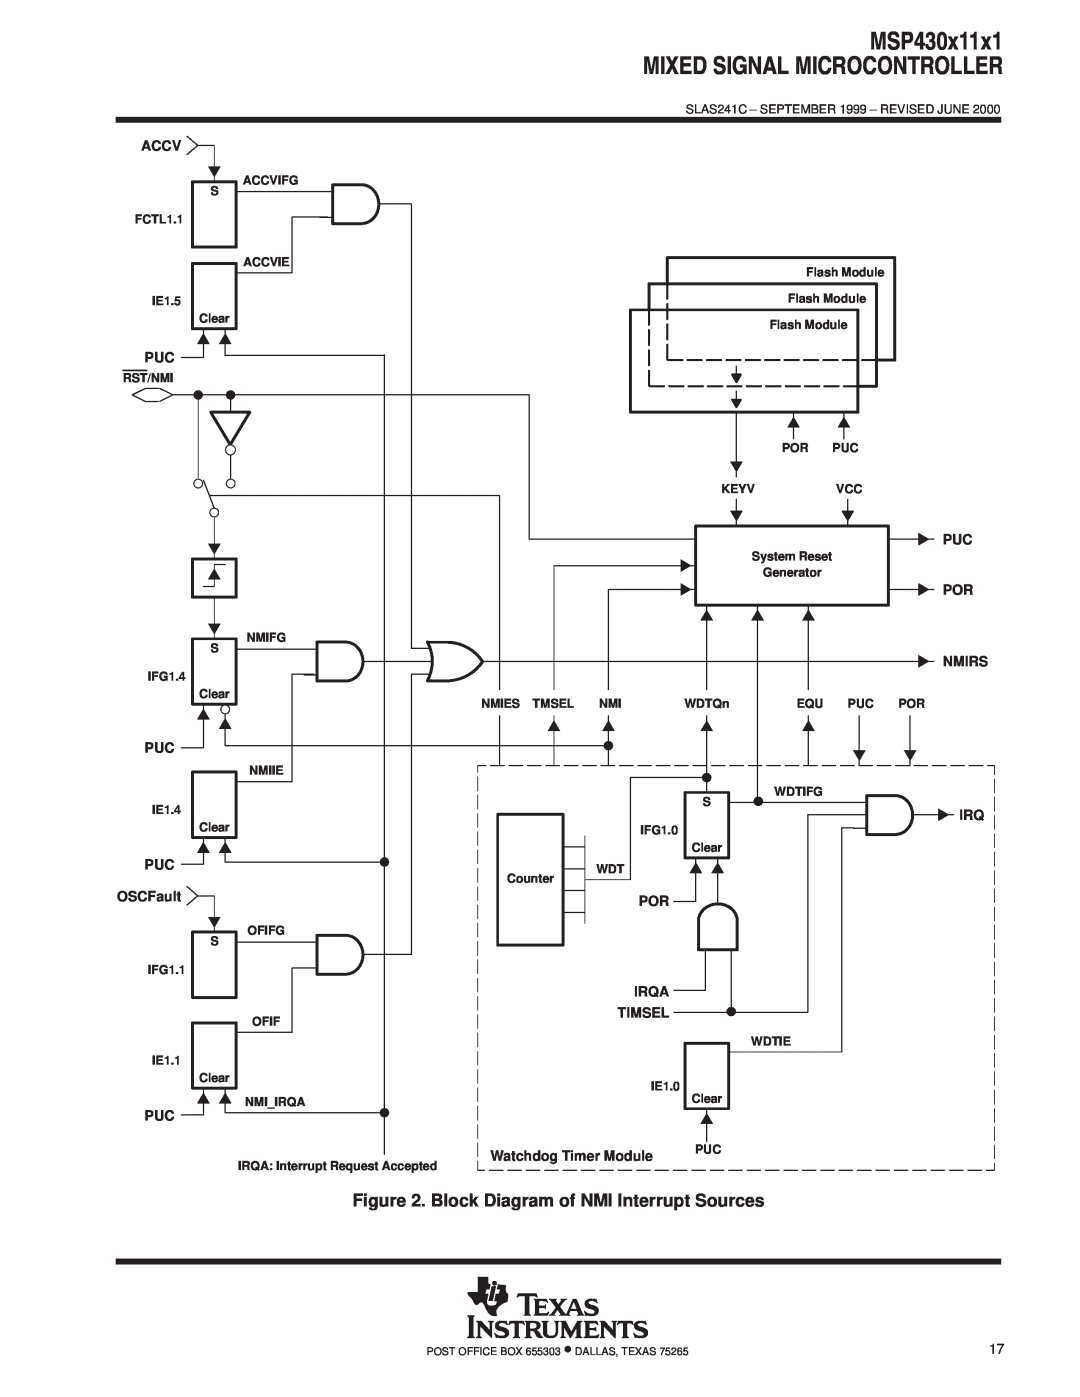 Texas Instruments Block Diagram of NMI Interrupt Sources, MSP430x11x1 MIXED SIGNAL MICROCONTROLLER, Flash Module, Ofifg 